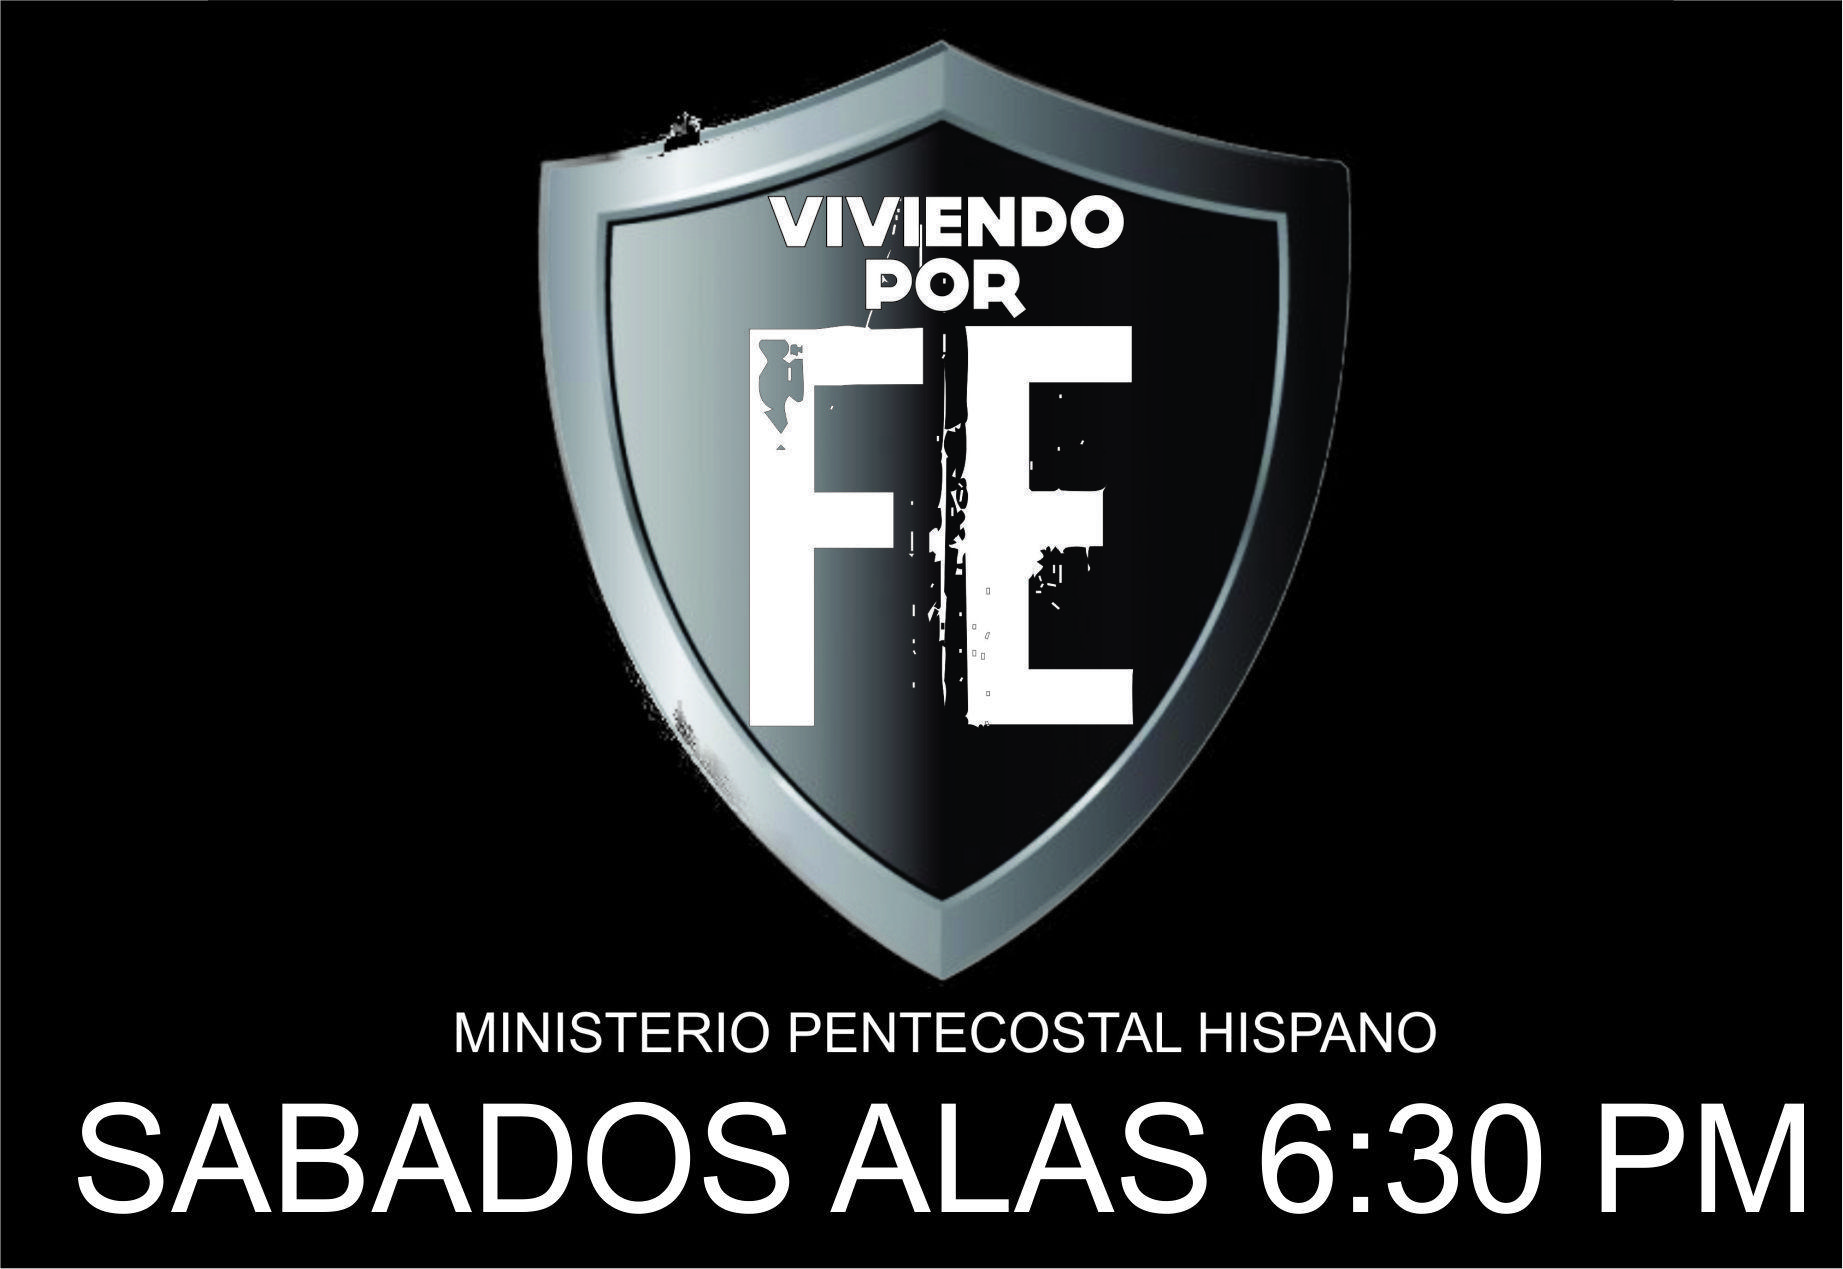 Hispanic Logo - Hispanic Logo and Service time